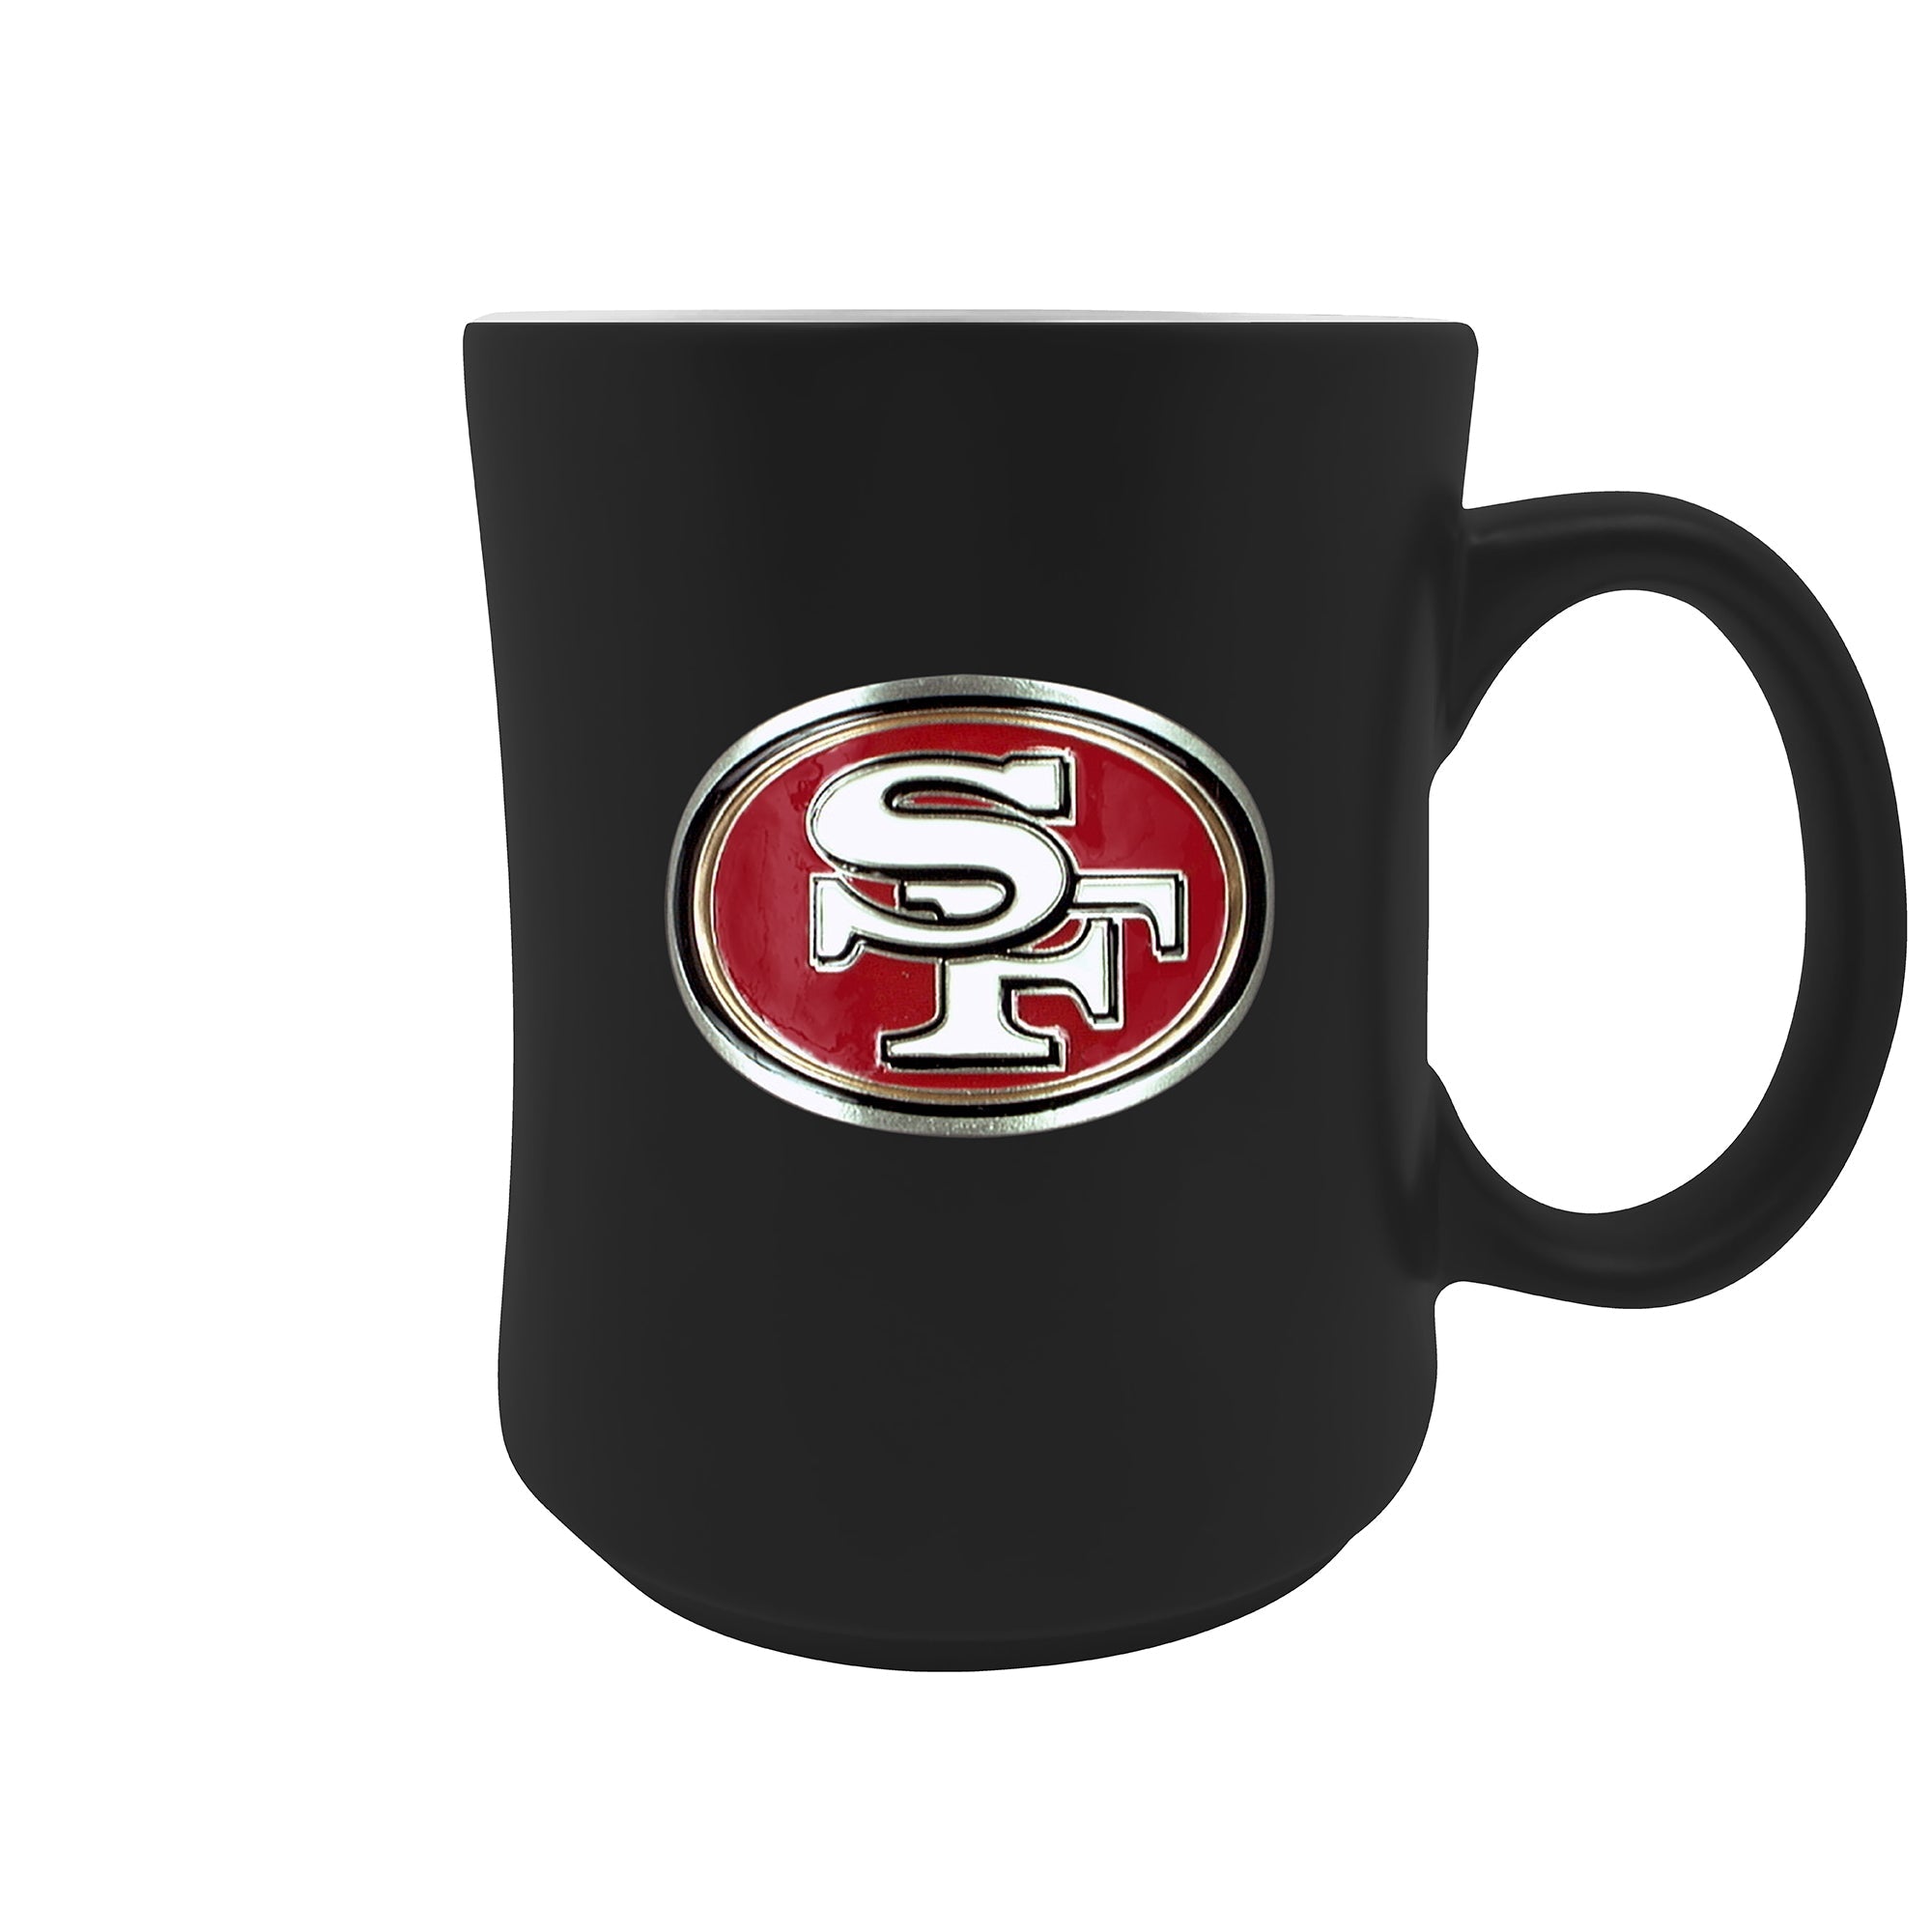 San Francisco 49ers 19 oz. Stealth STARTER Ceramic Coffee Mug